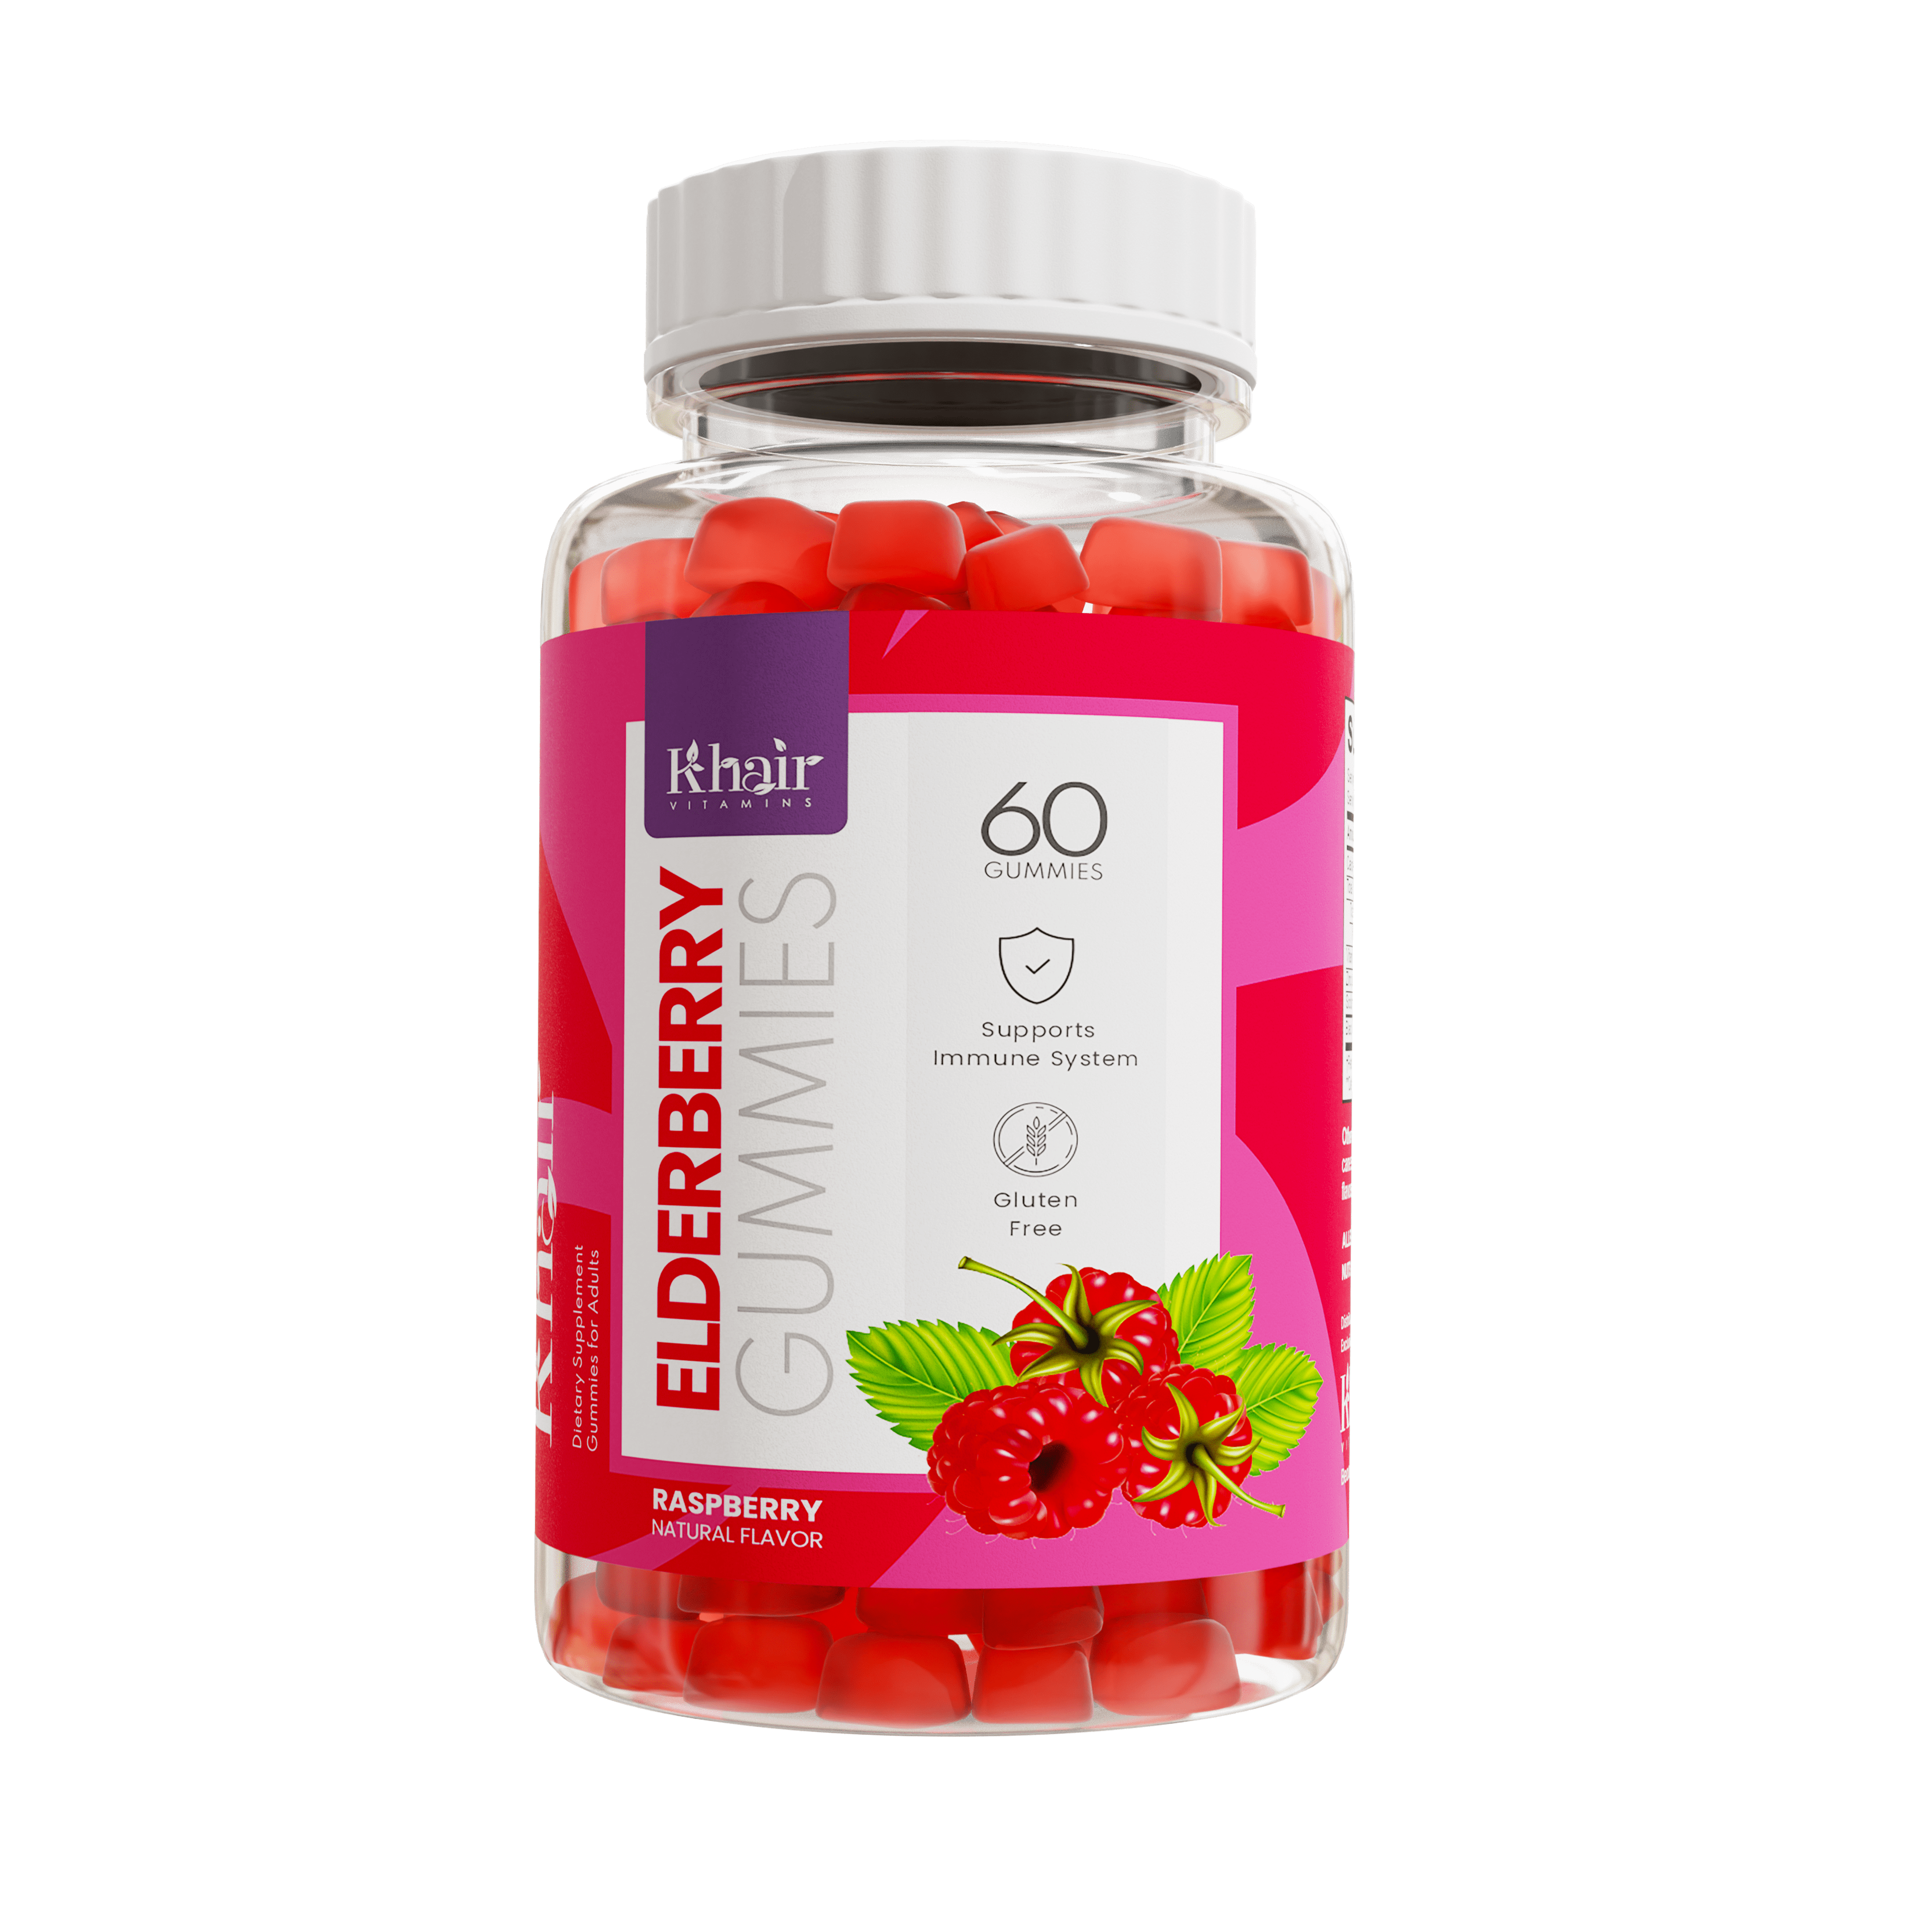 A bottle of Elderberry gummies used for immune health